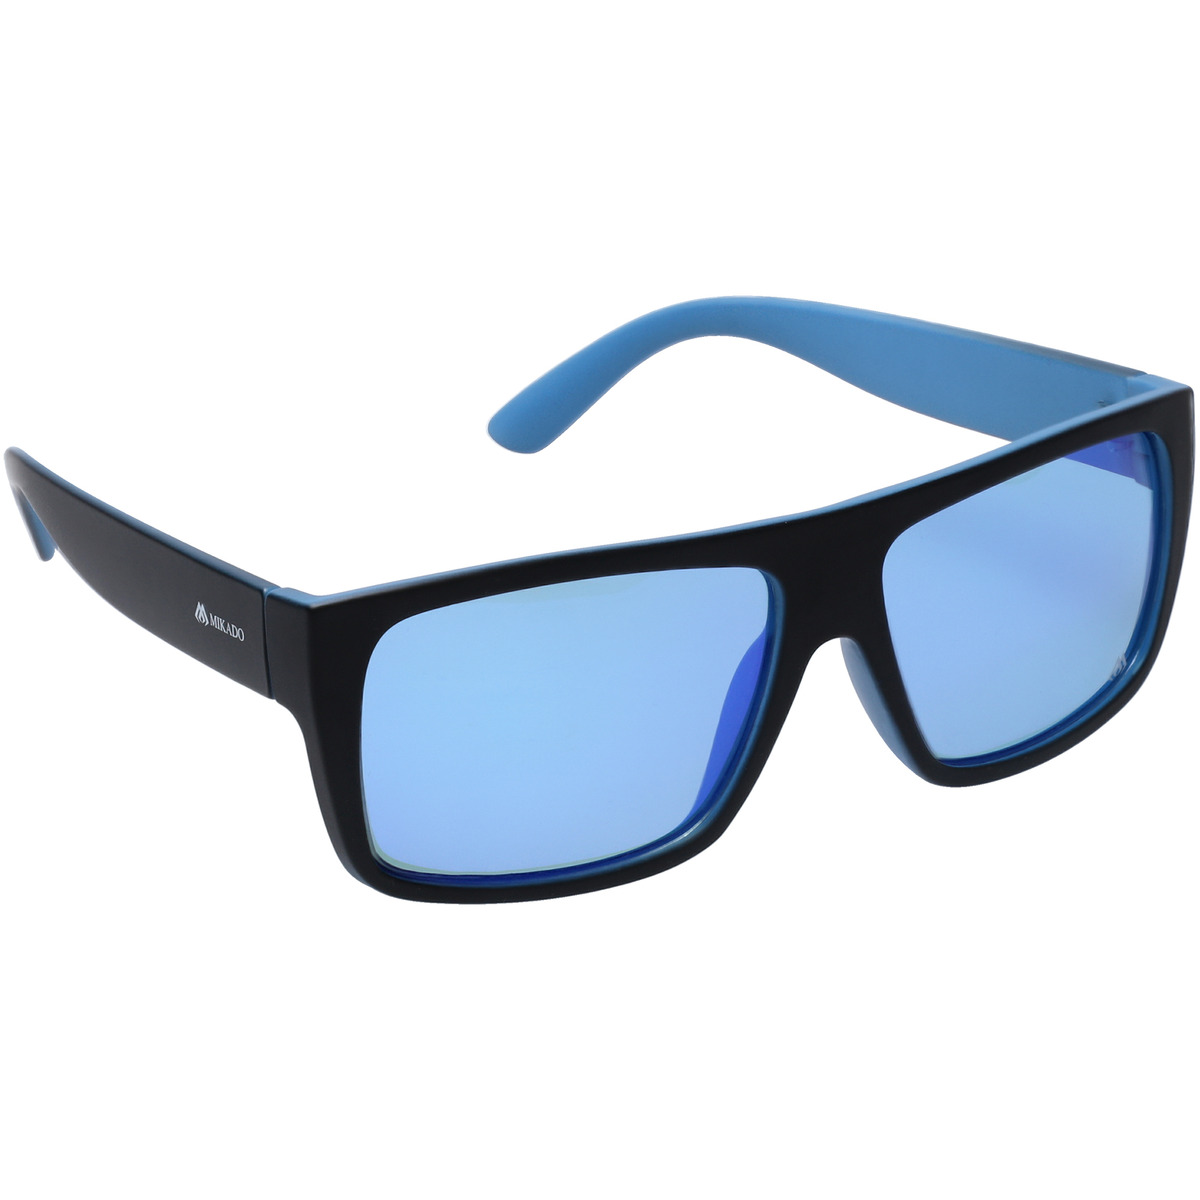 Mikado Sunglasses Polarized - 595 BROWN